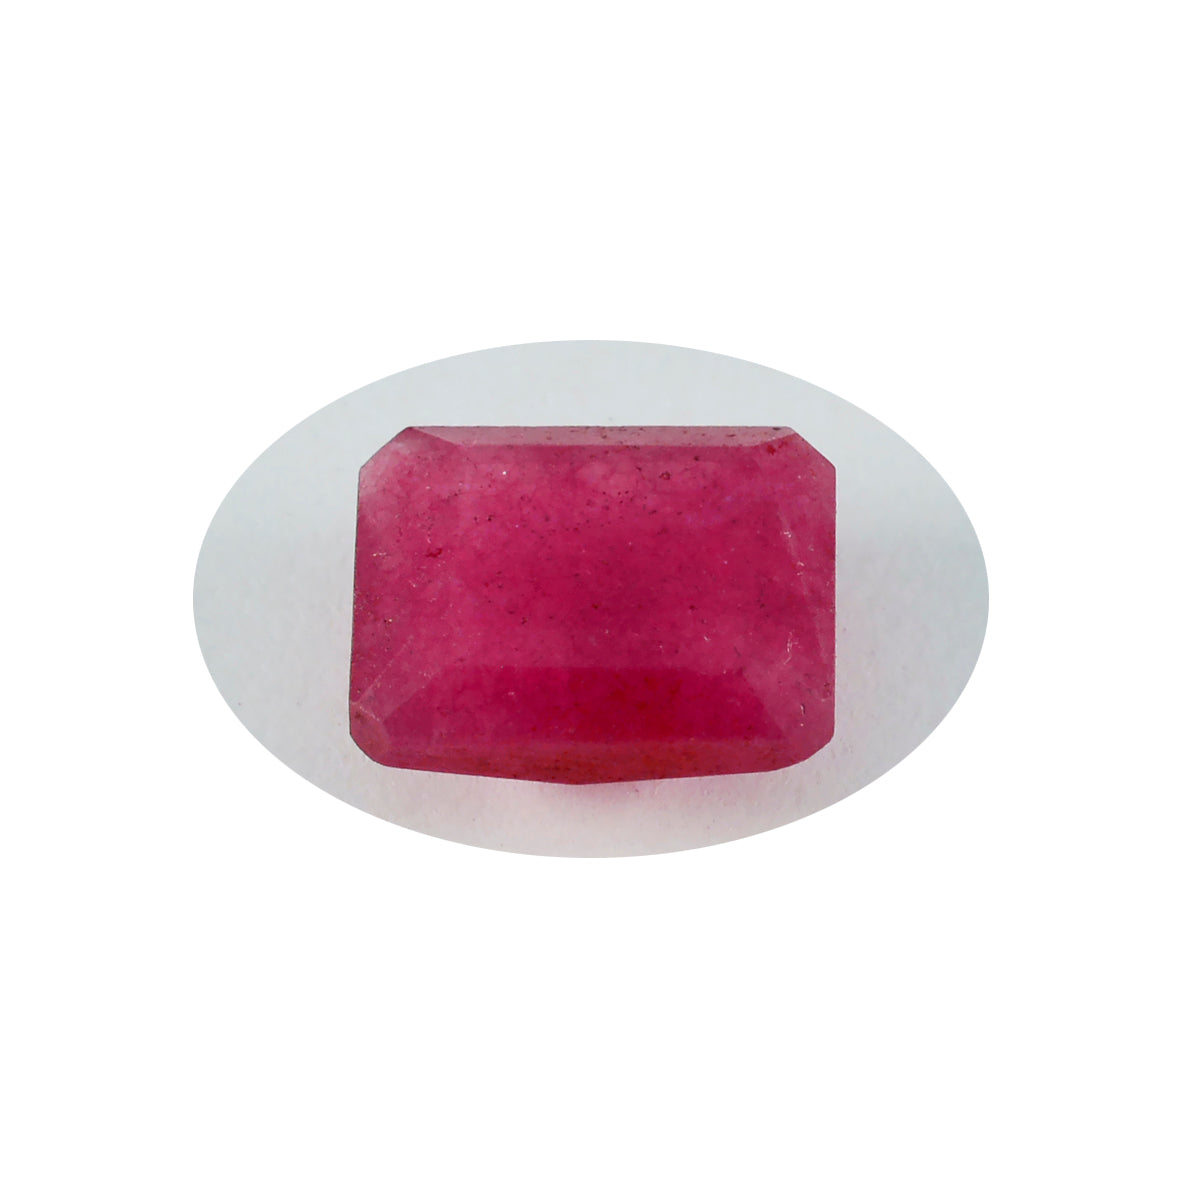 Riyogems 1PC Real Red Jasper Faceted 5x7 mm Octagon Shape A1 Quality Gems